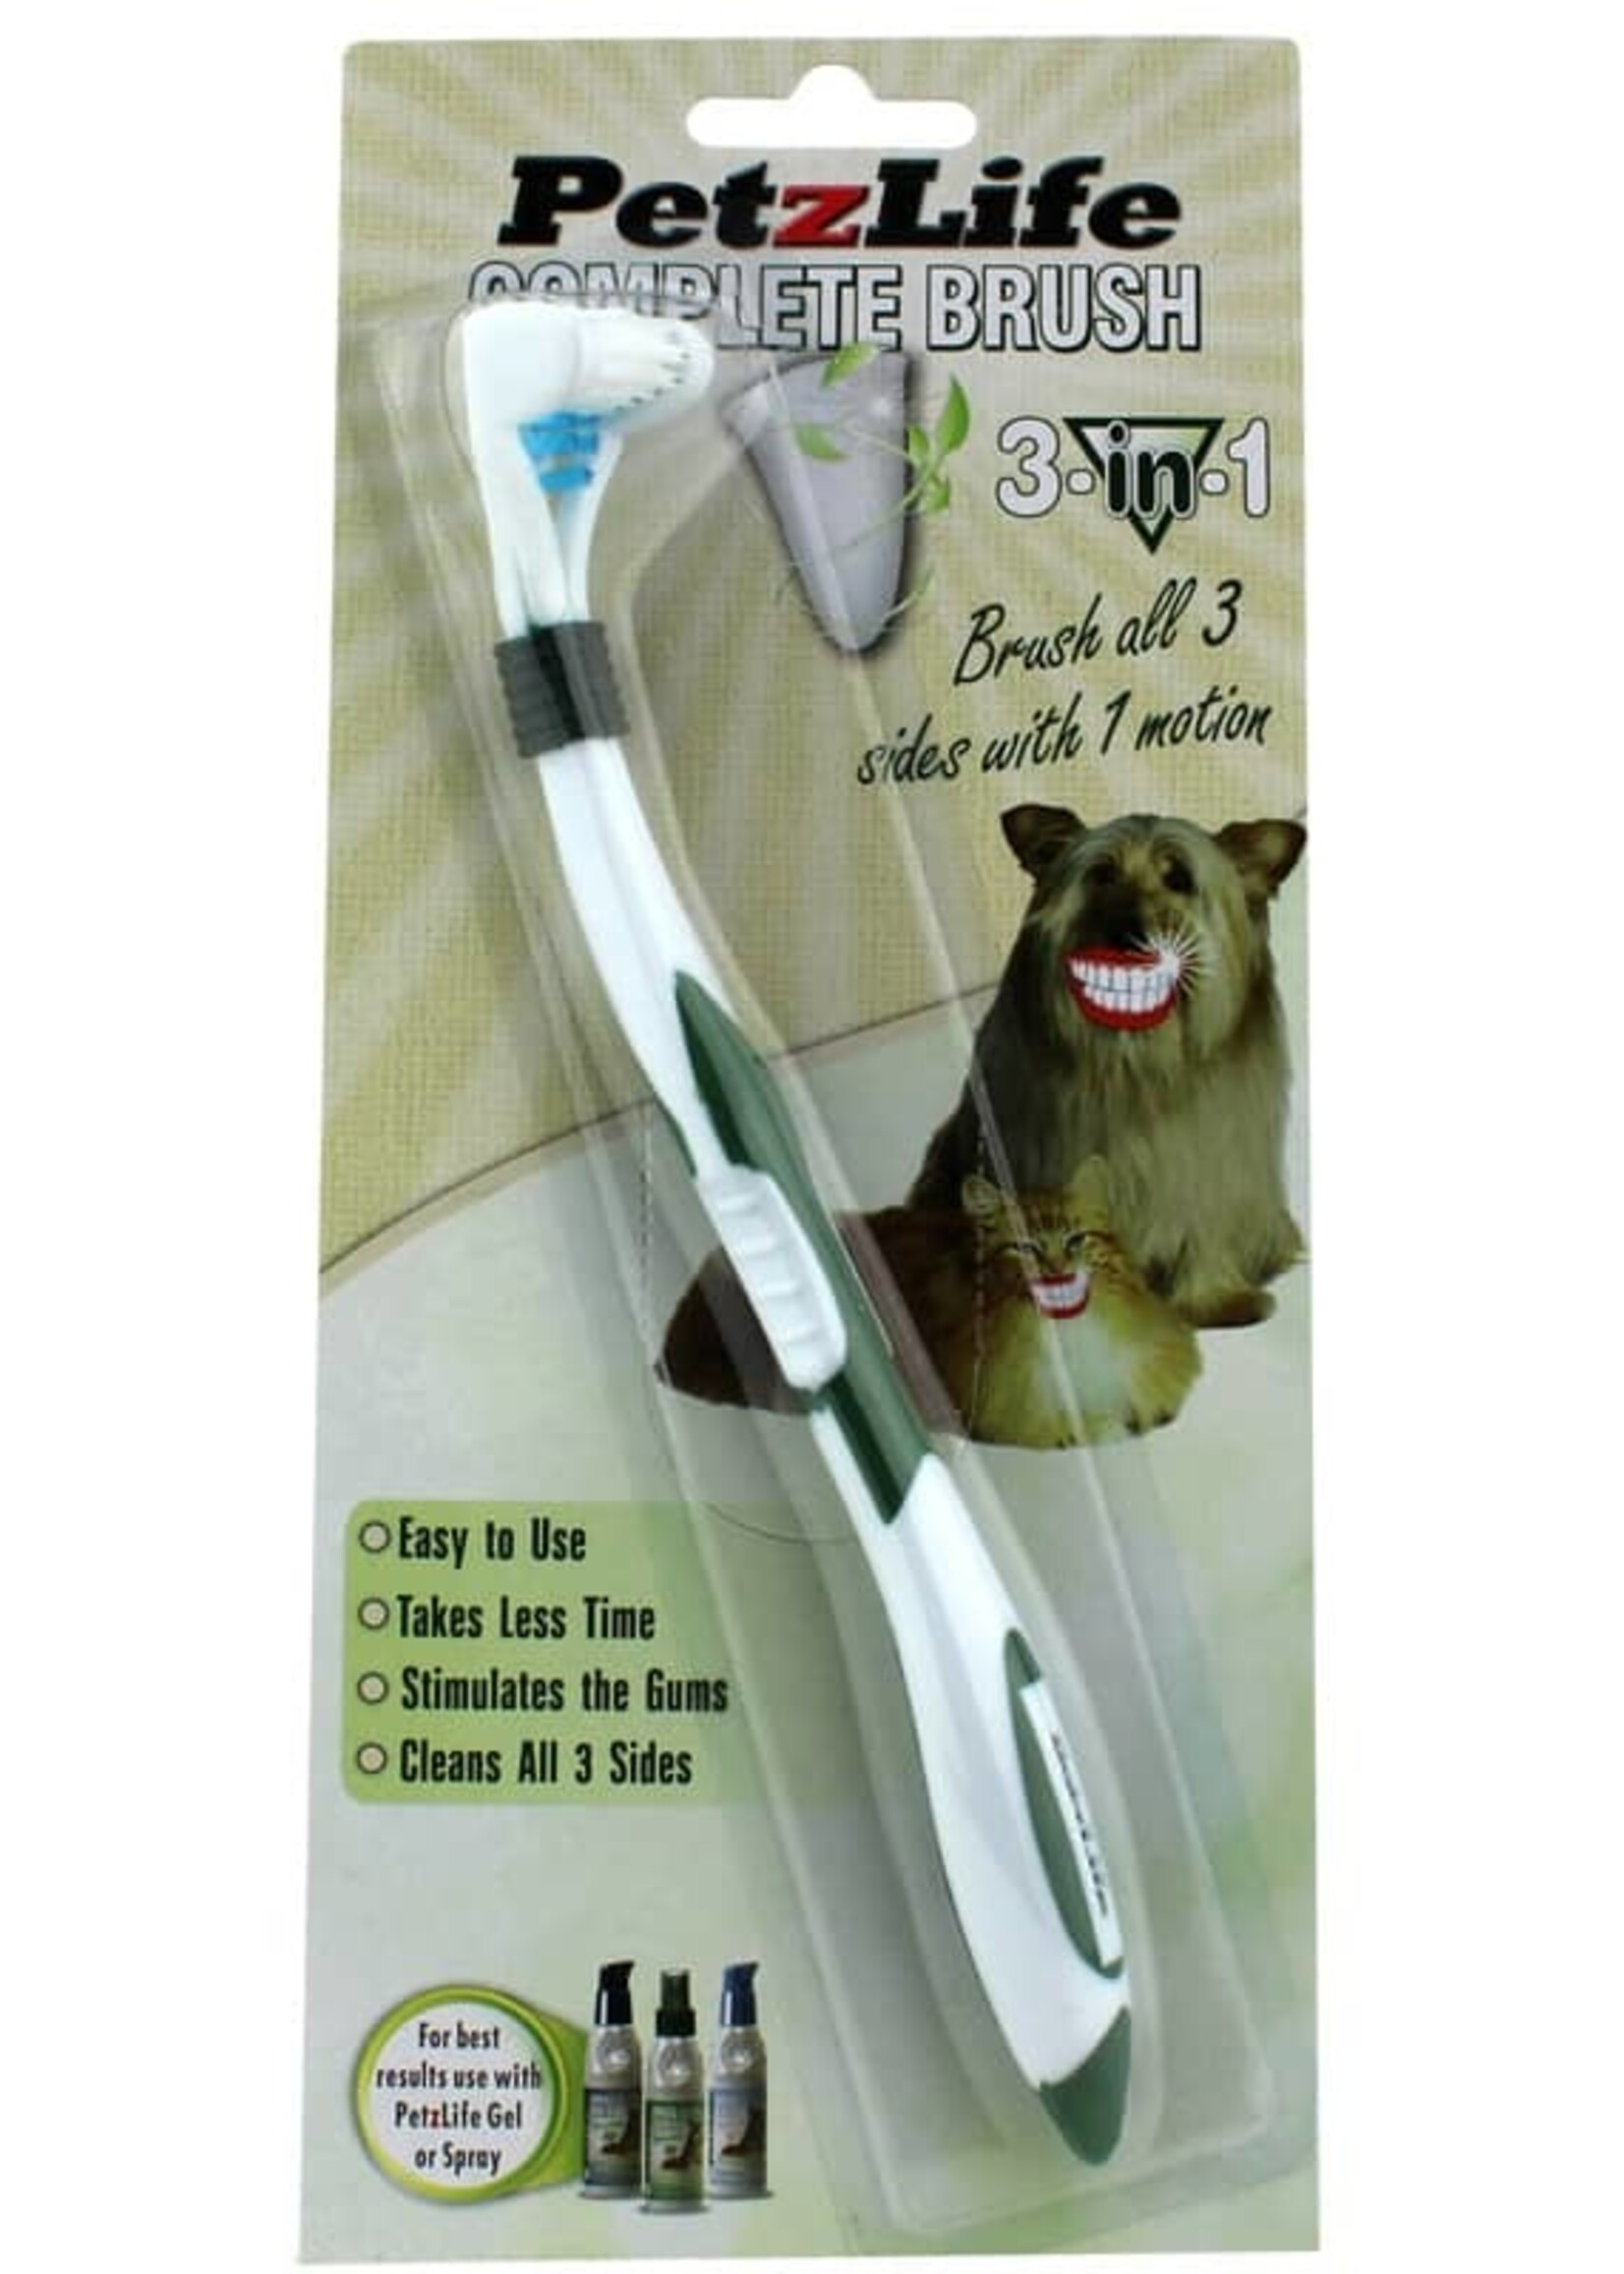 PetzLife PetzLife Complete Brush 3-in-1 Dog & Cat Toothbrush